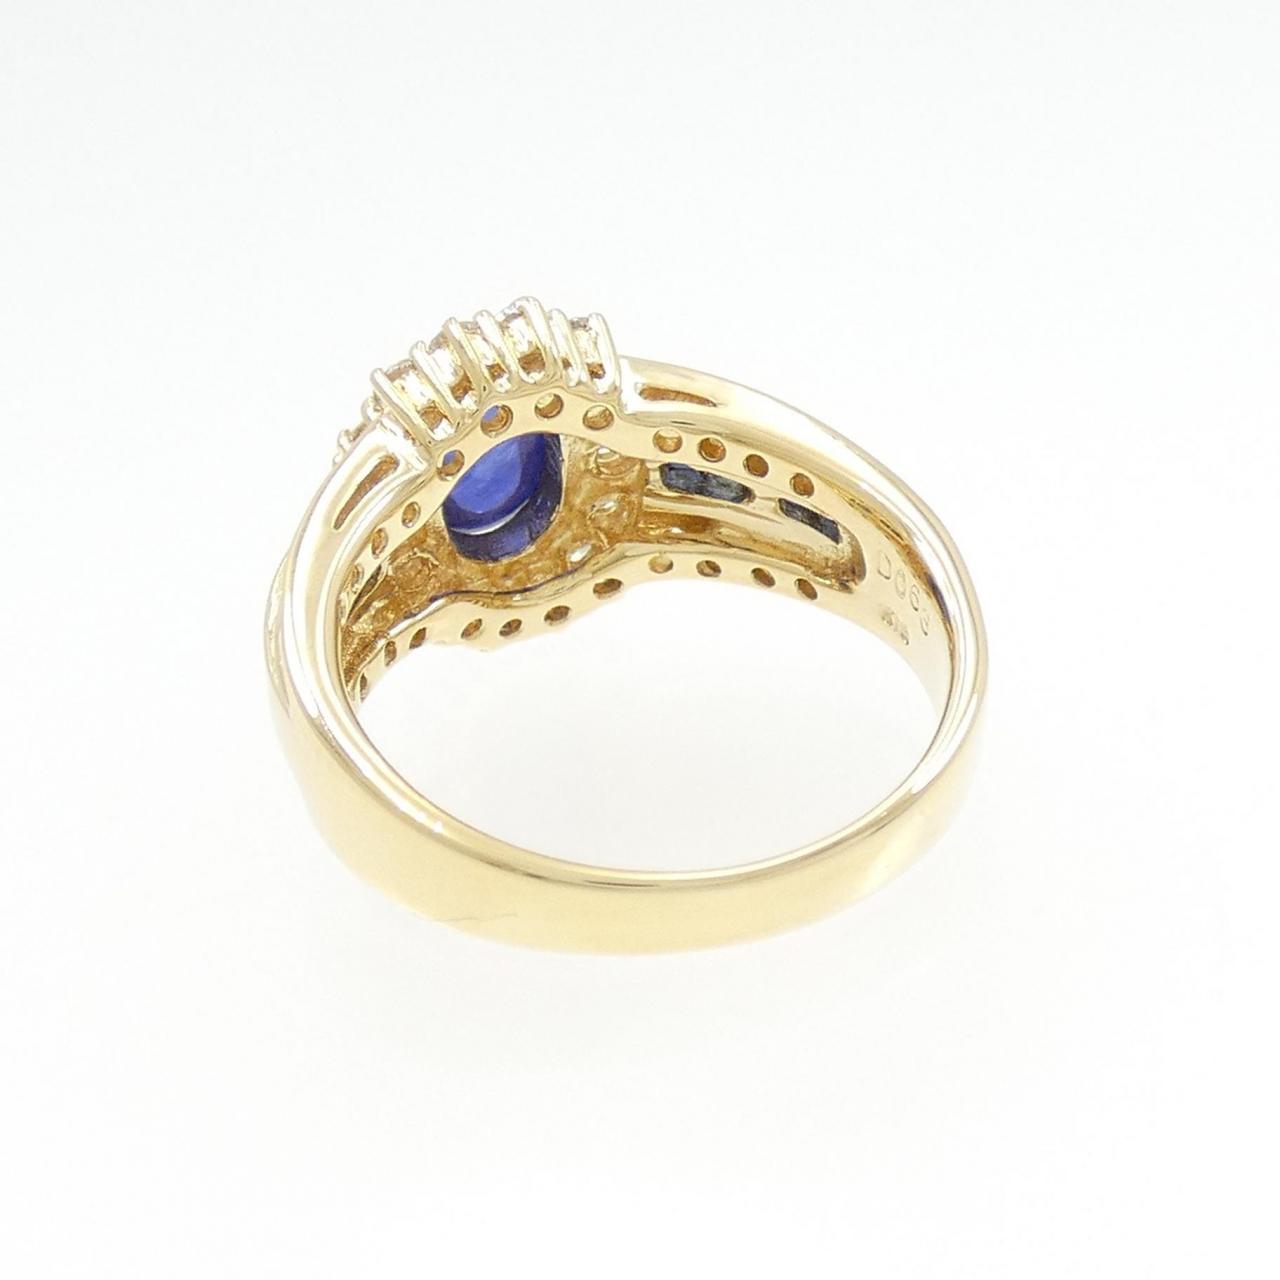 K18YG Sapphire Ring 1.91CT